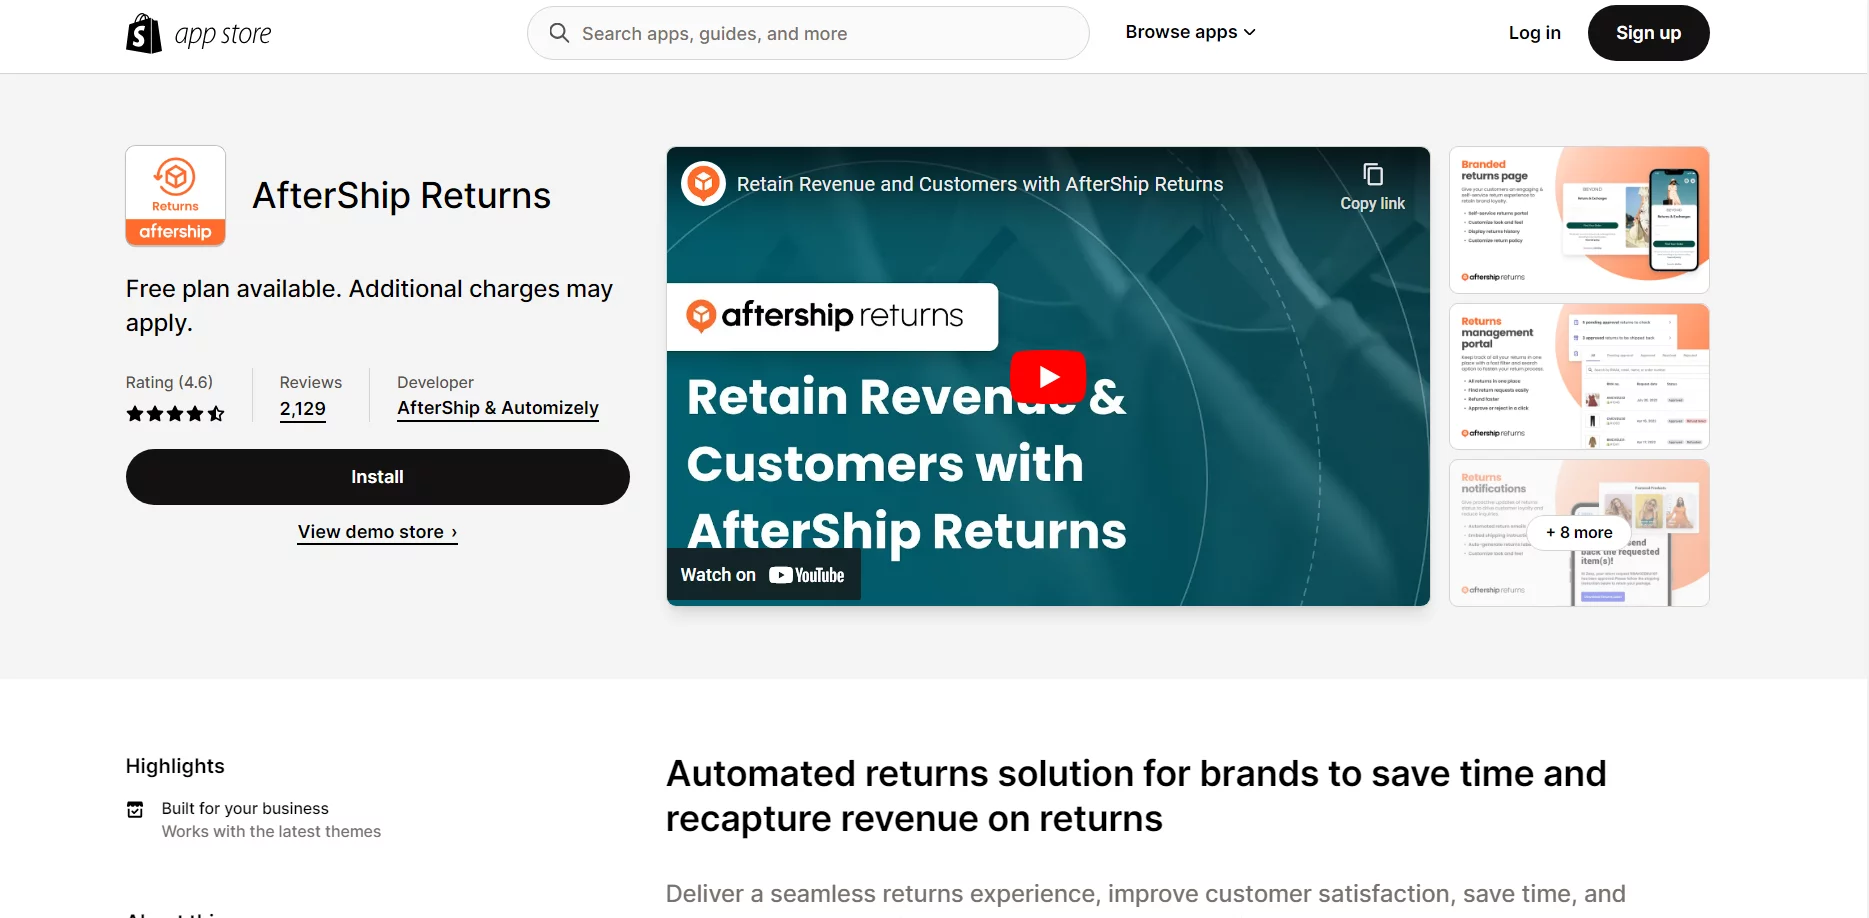 Best Shopify Returns Apps: AfterShip Returns